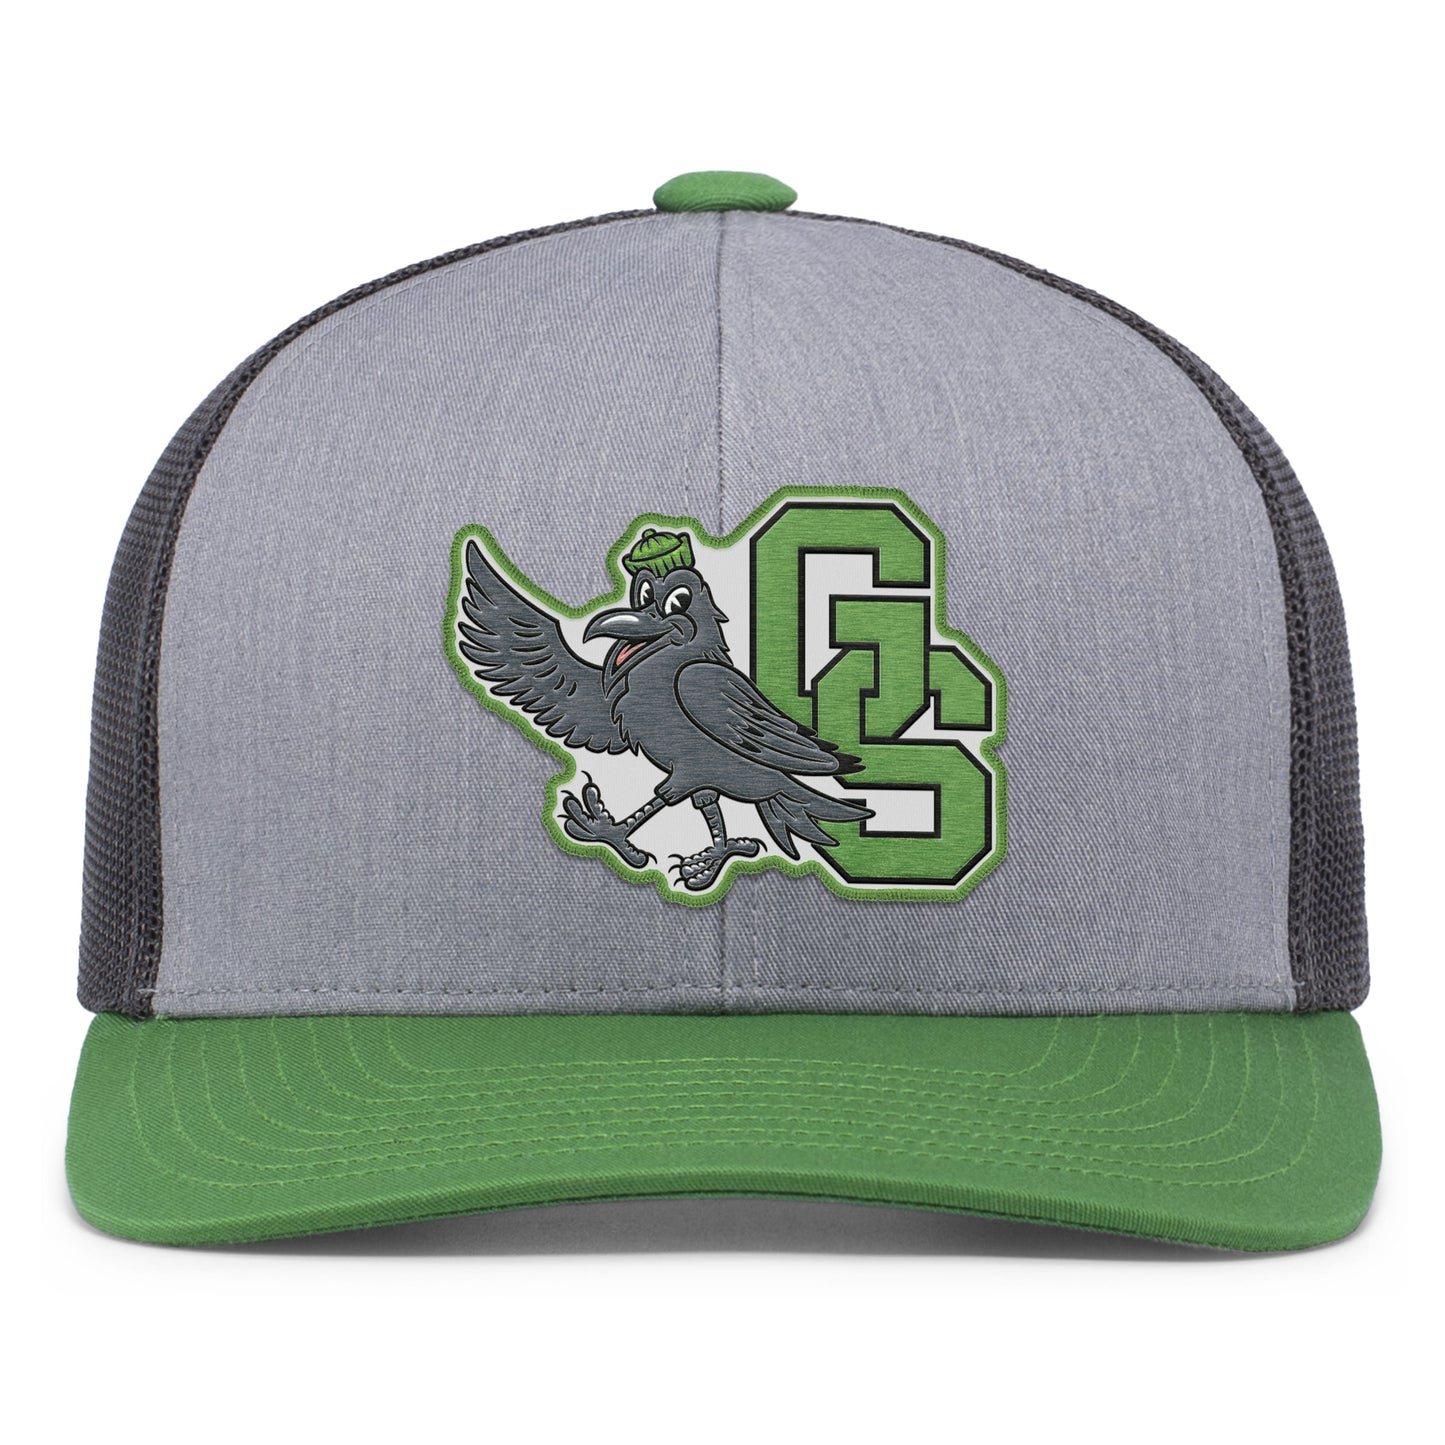 Grove GS Raven Heather/Charcoal/Green Trucker Hat - Pre-Order